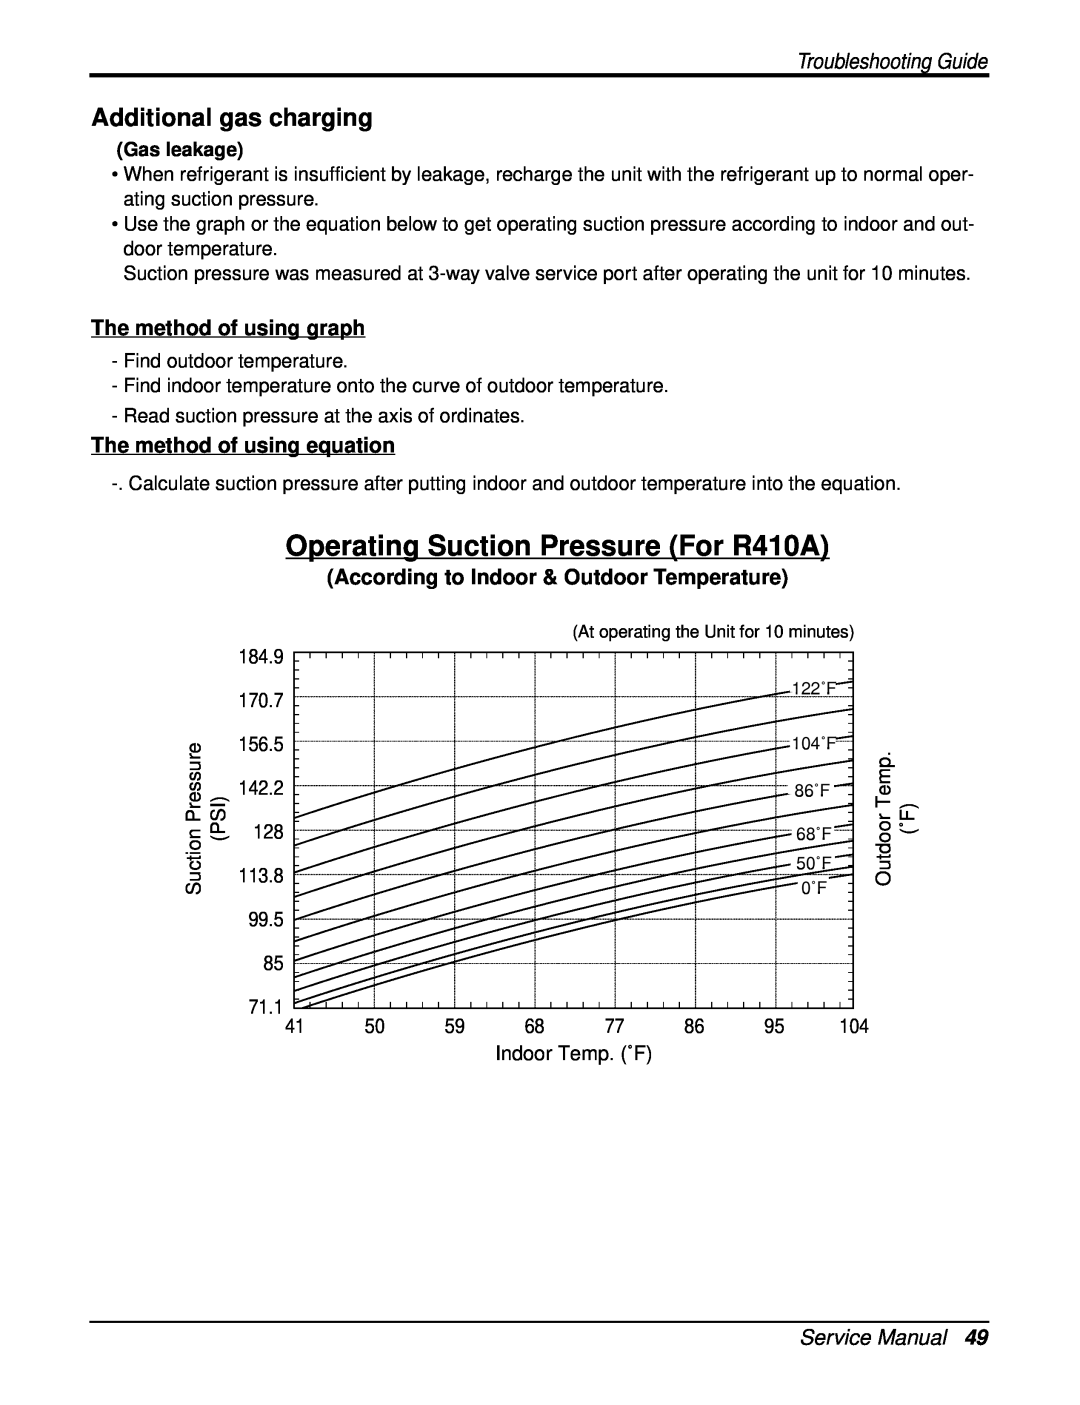 Heat Controller DMC12SB-0 Additional gas charging, The method of using graph, The method of using equation, Gas leakage 